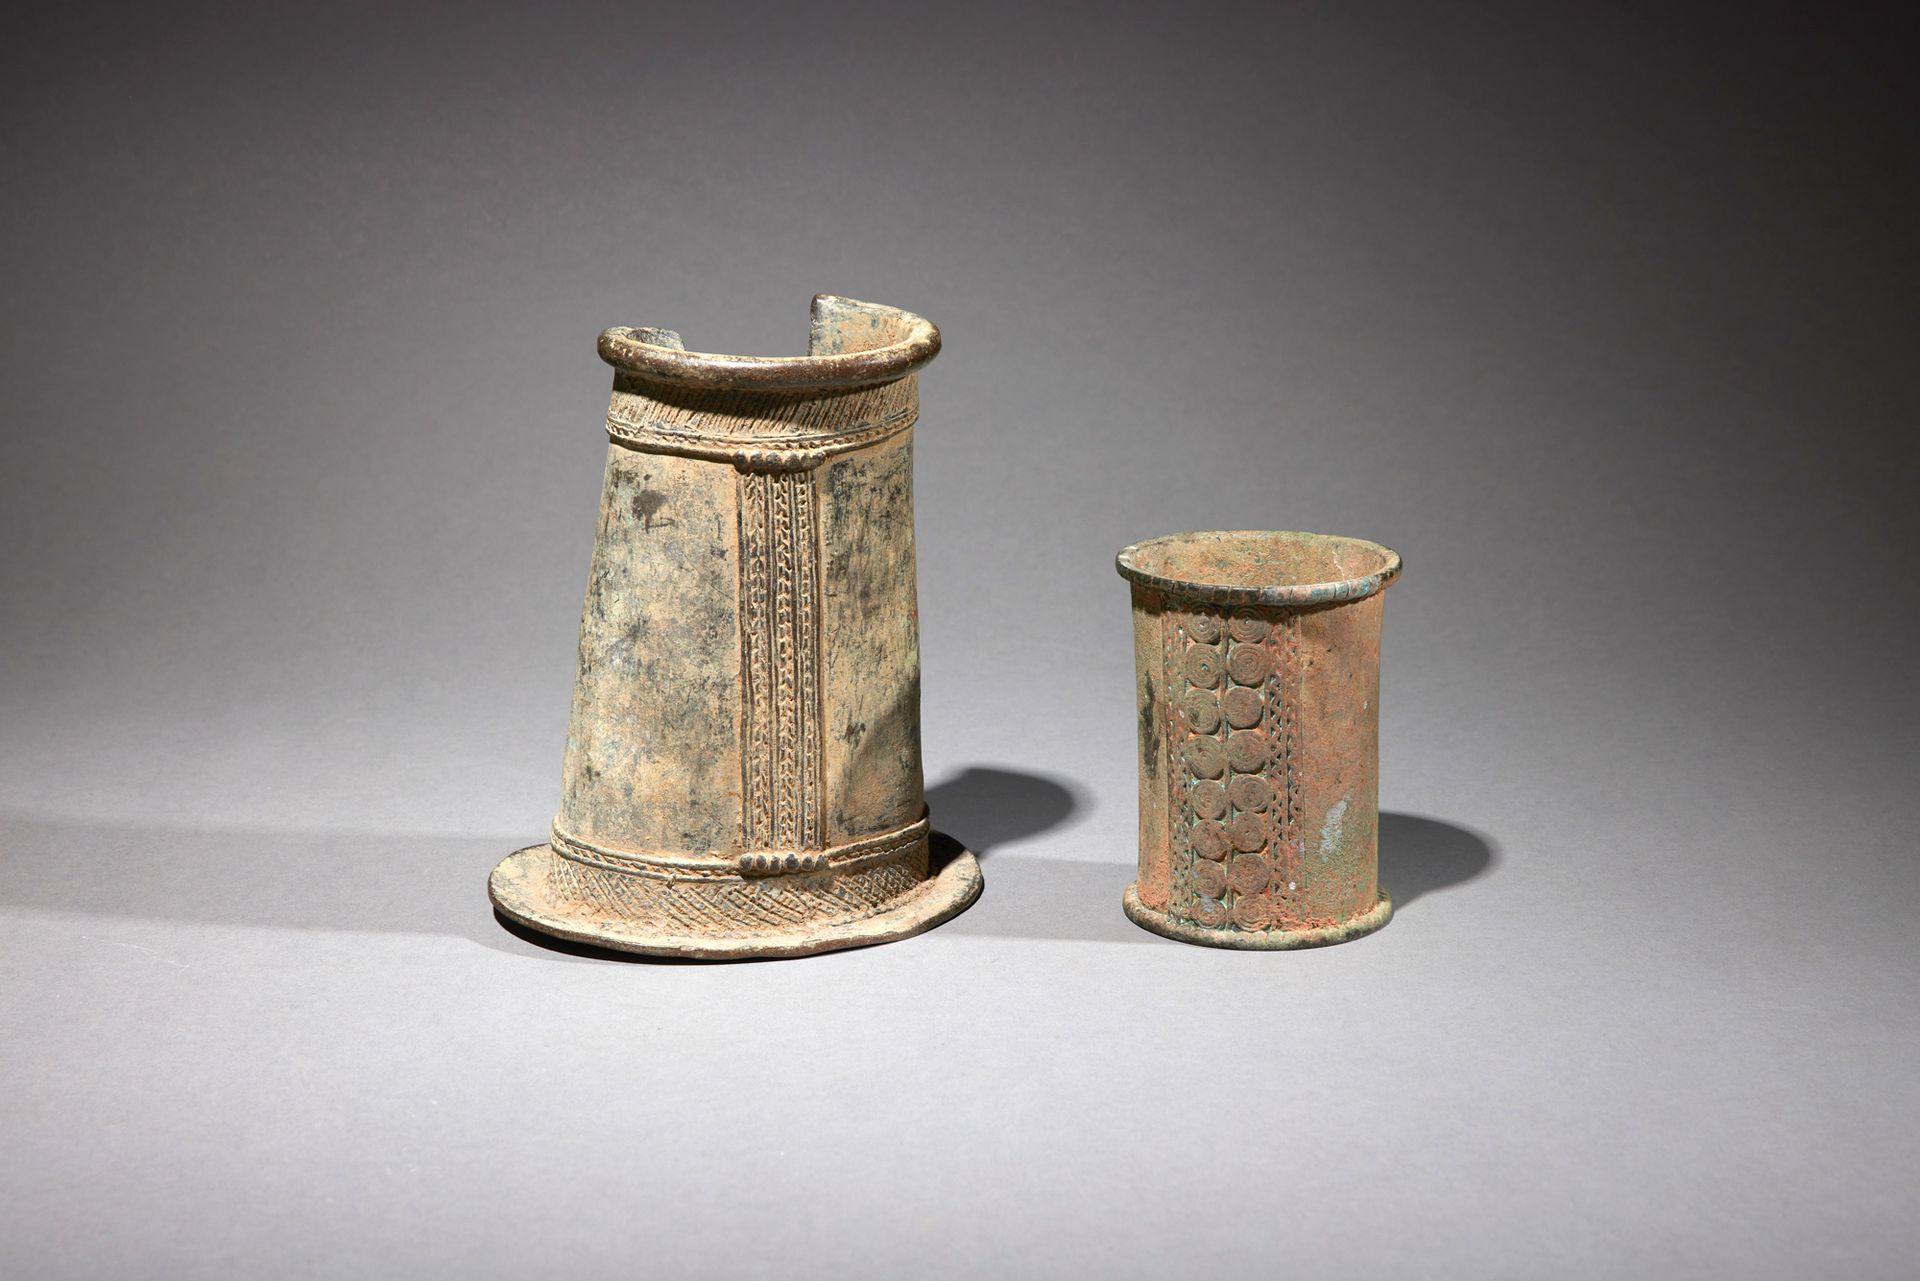 Null 两个装饰品

西非

铜质

H.10和16厘米



一套两个饰品：一个脚链（Gurunsi?）和一个青铜手镯。表面上出现了浮雕式的几何装饰。